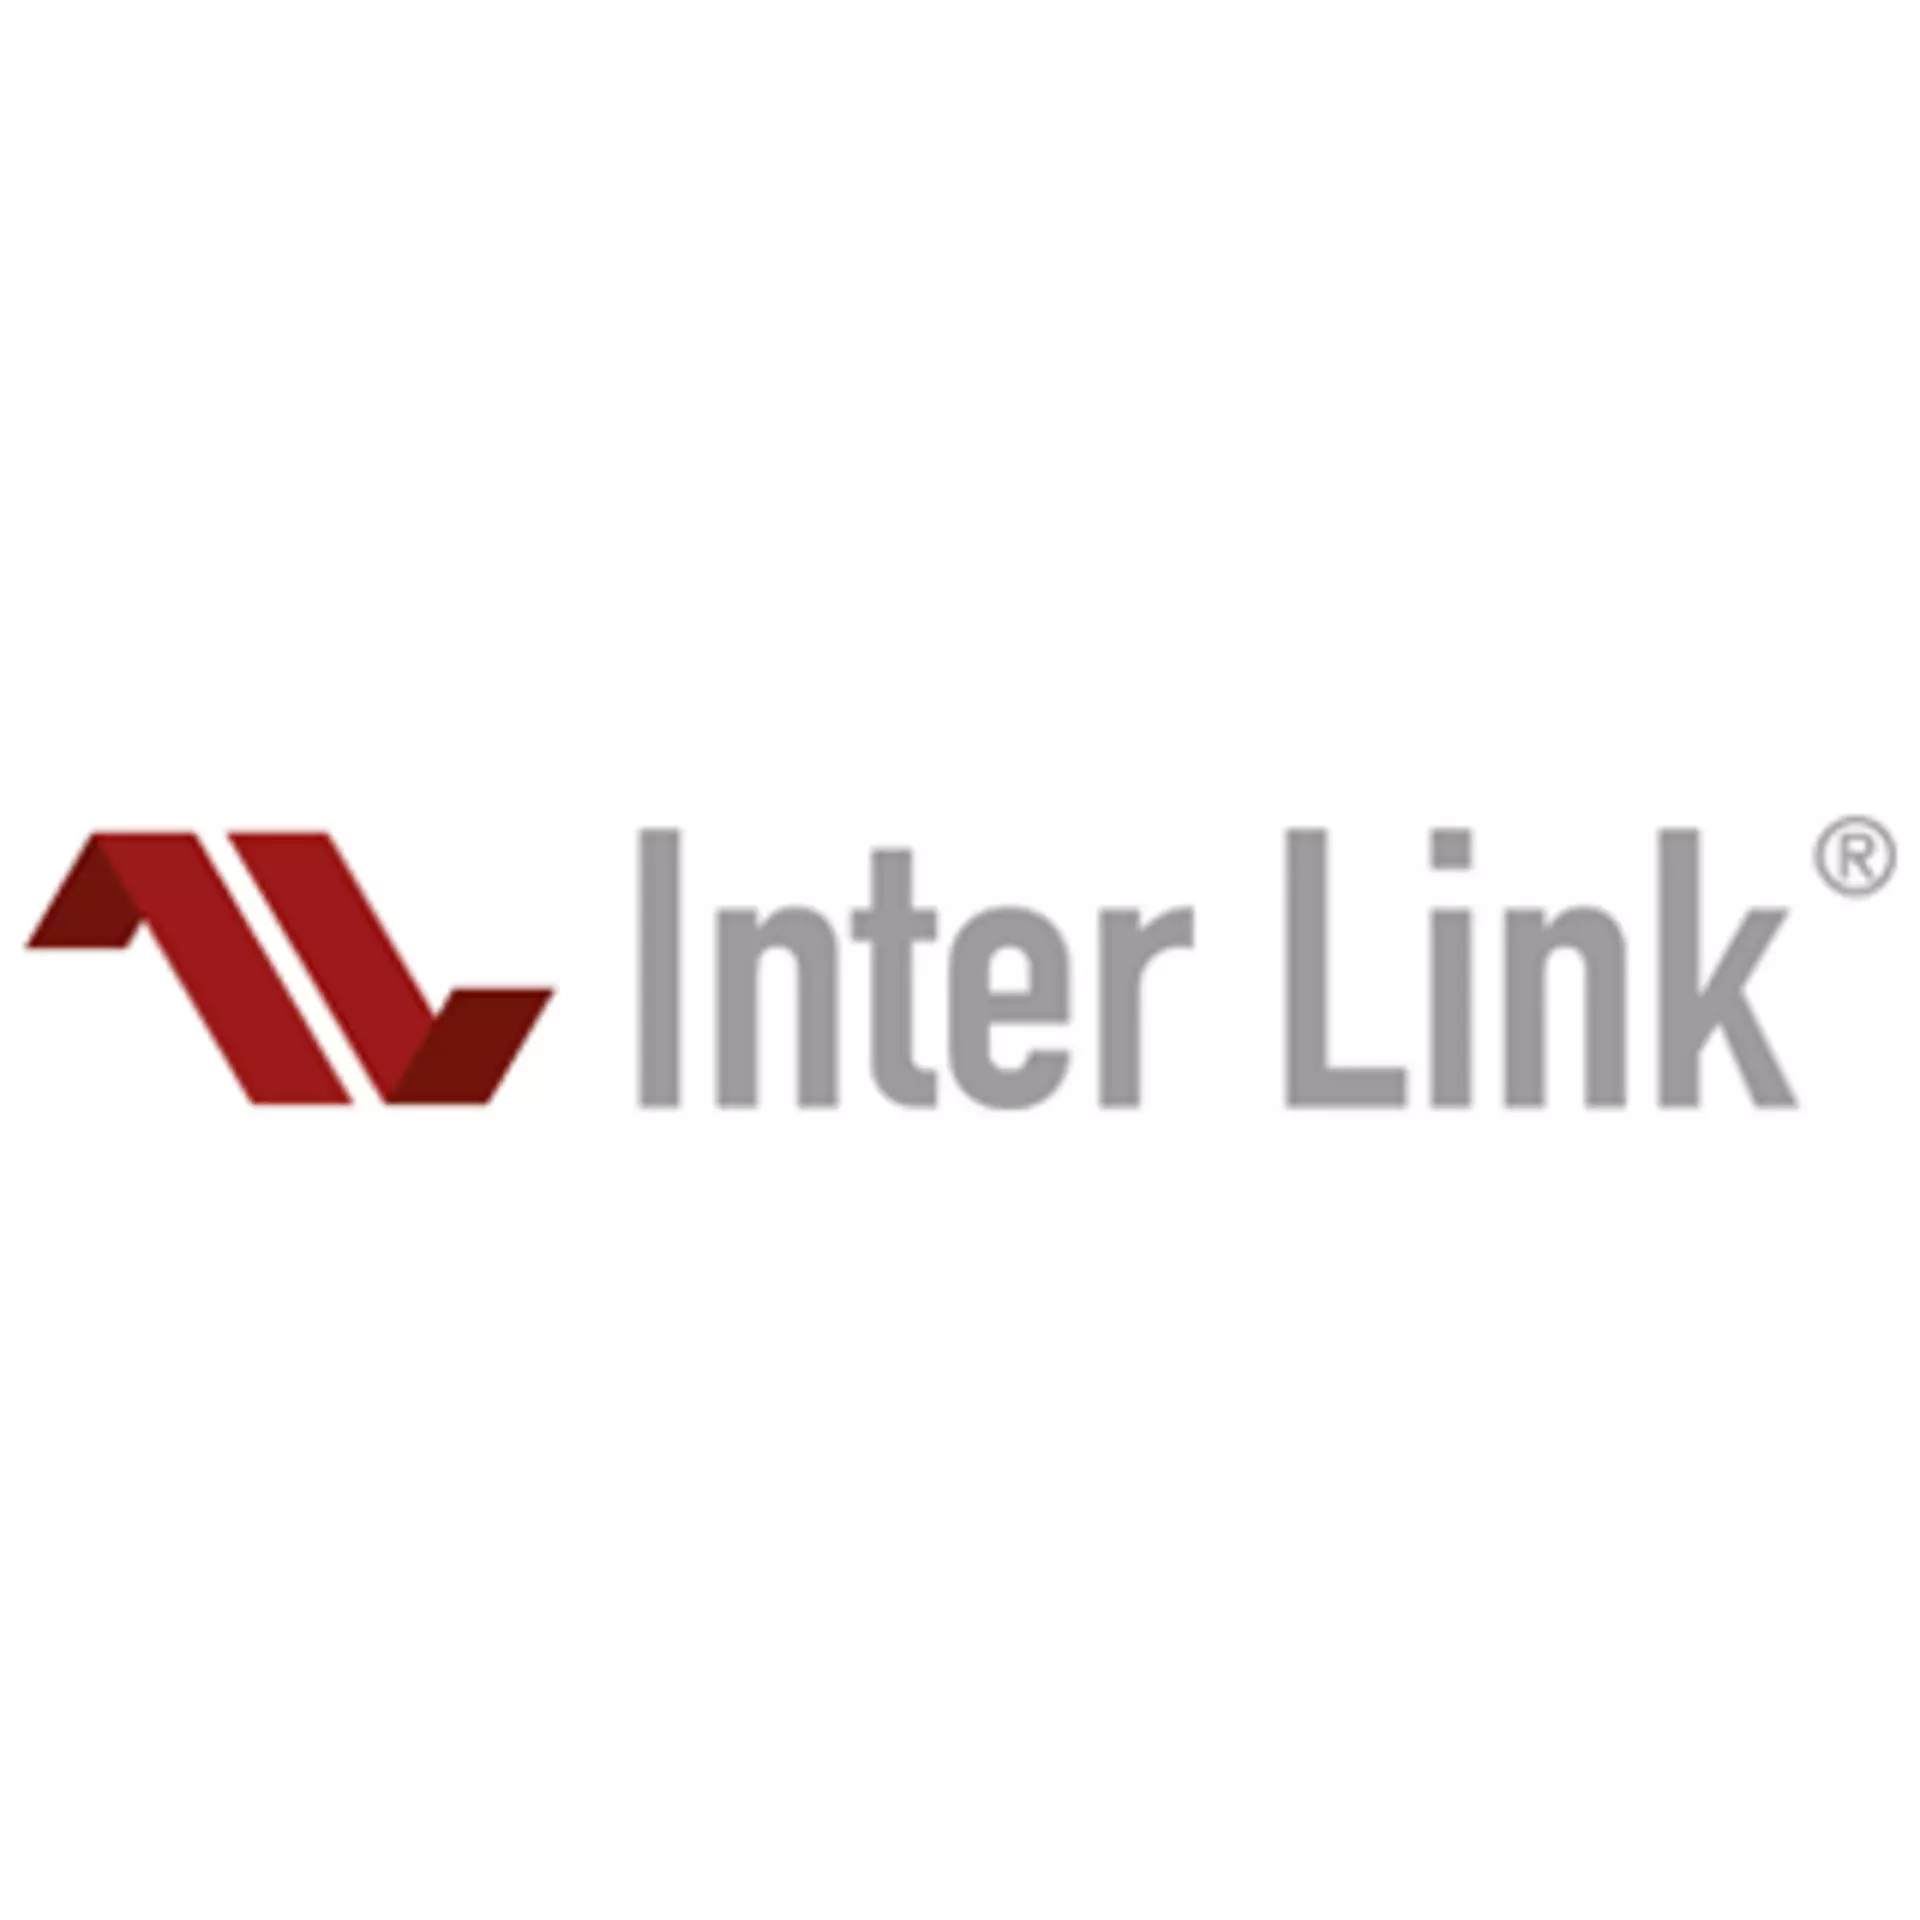 Inter Link Logo